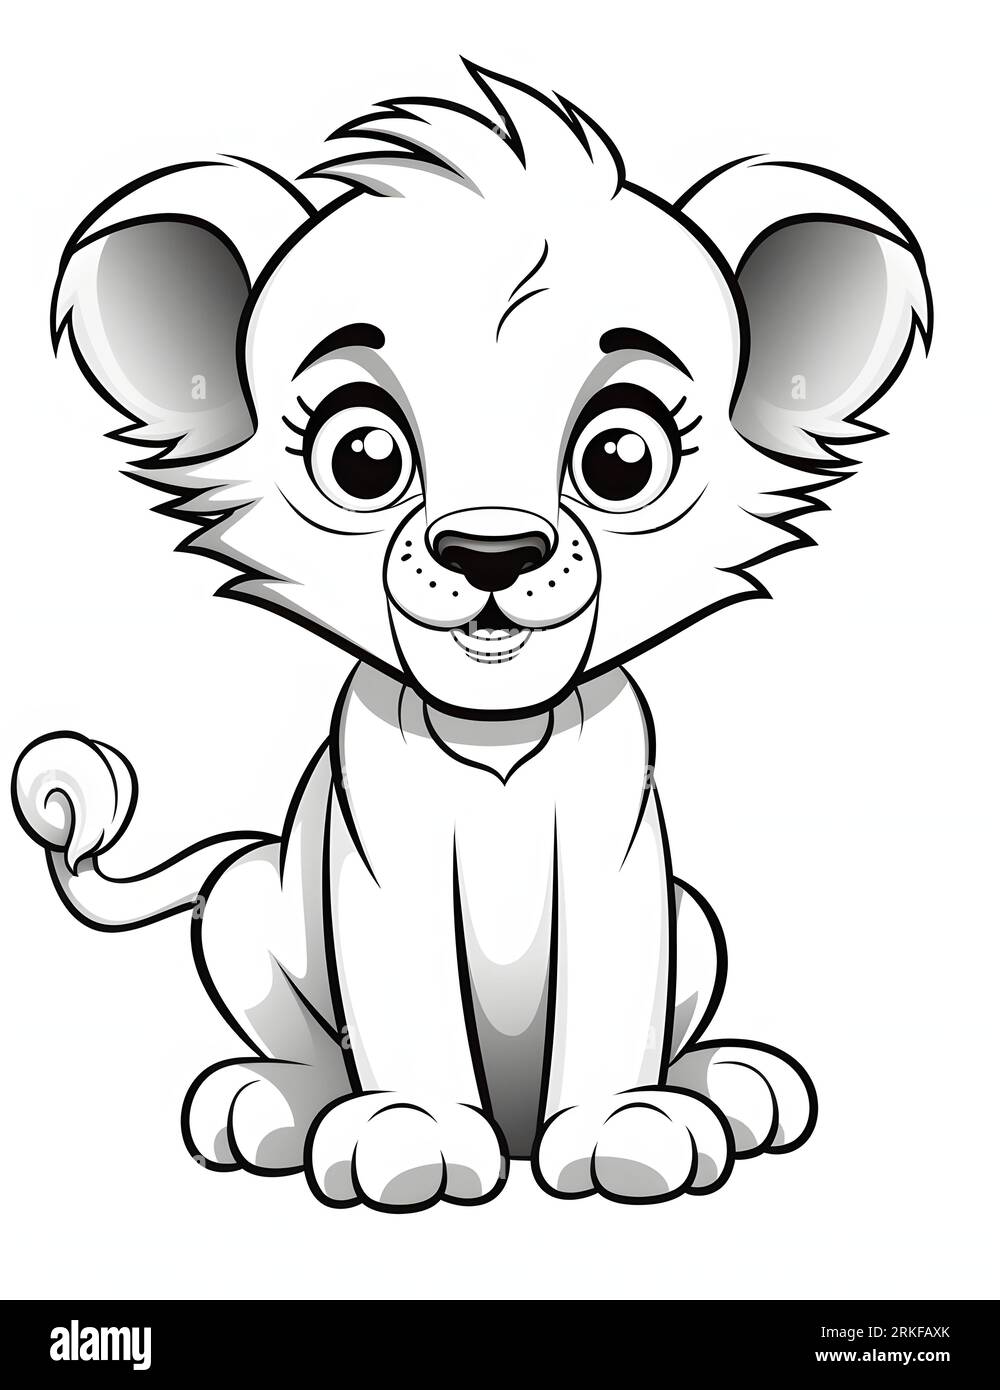 Lion cub | alanjonesart